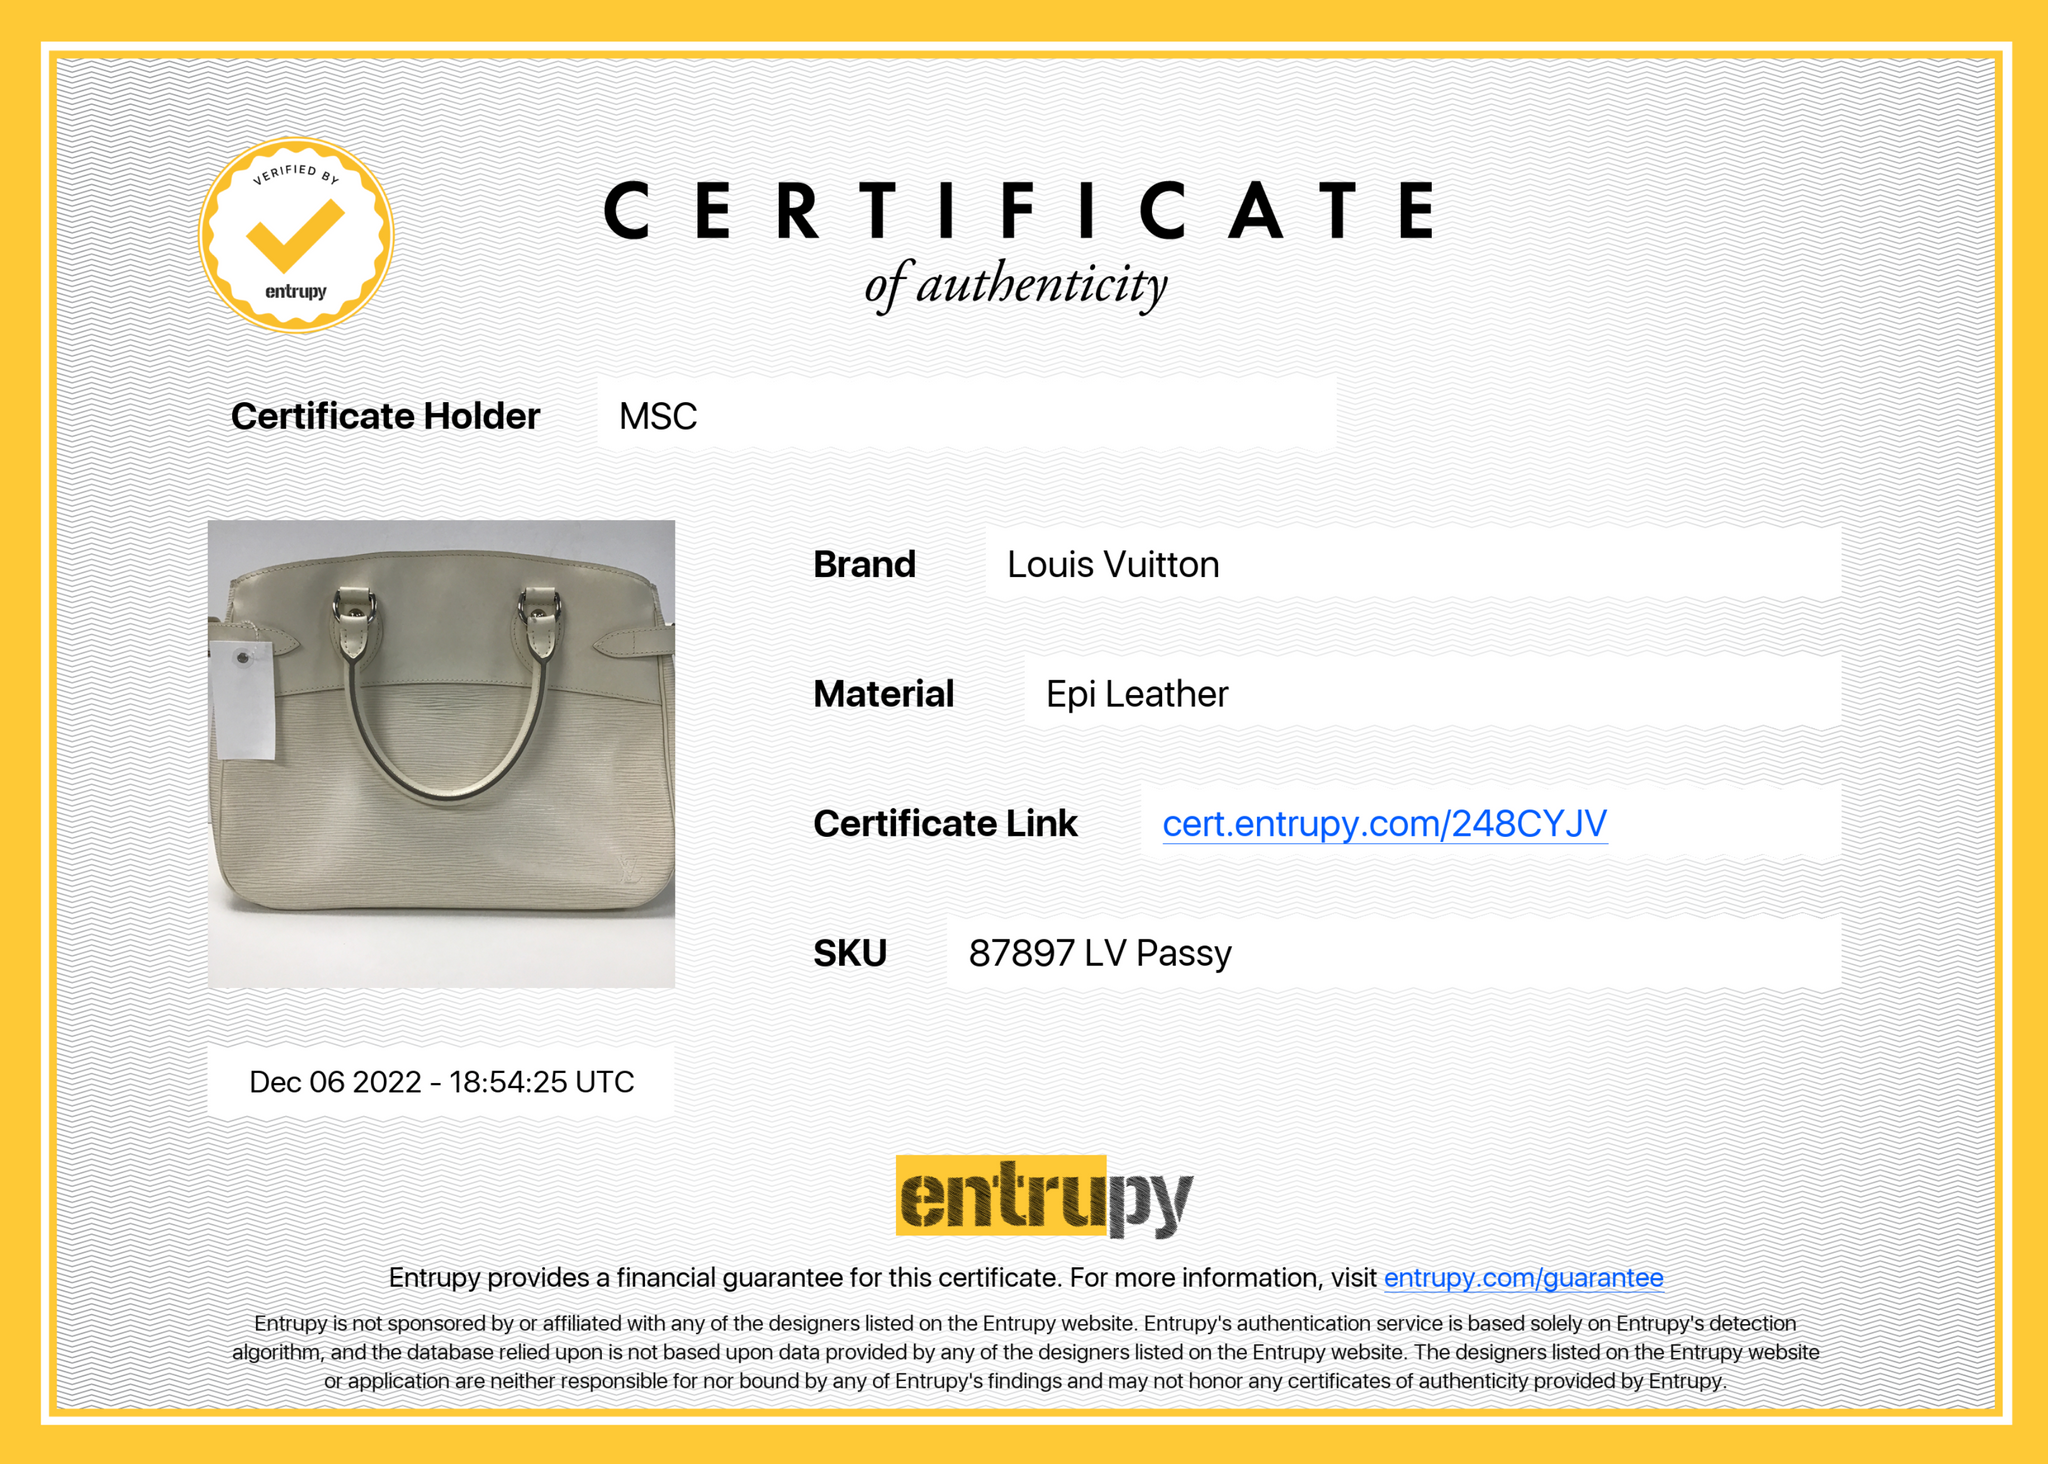 White Louis Vuitton Epi Passy PM Handbag